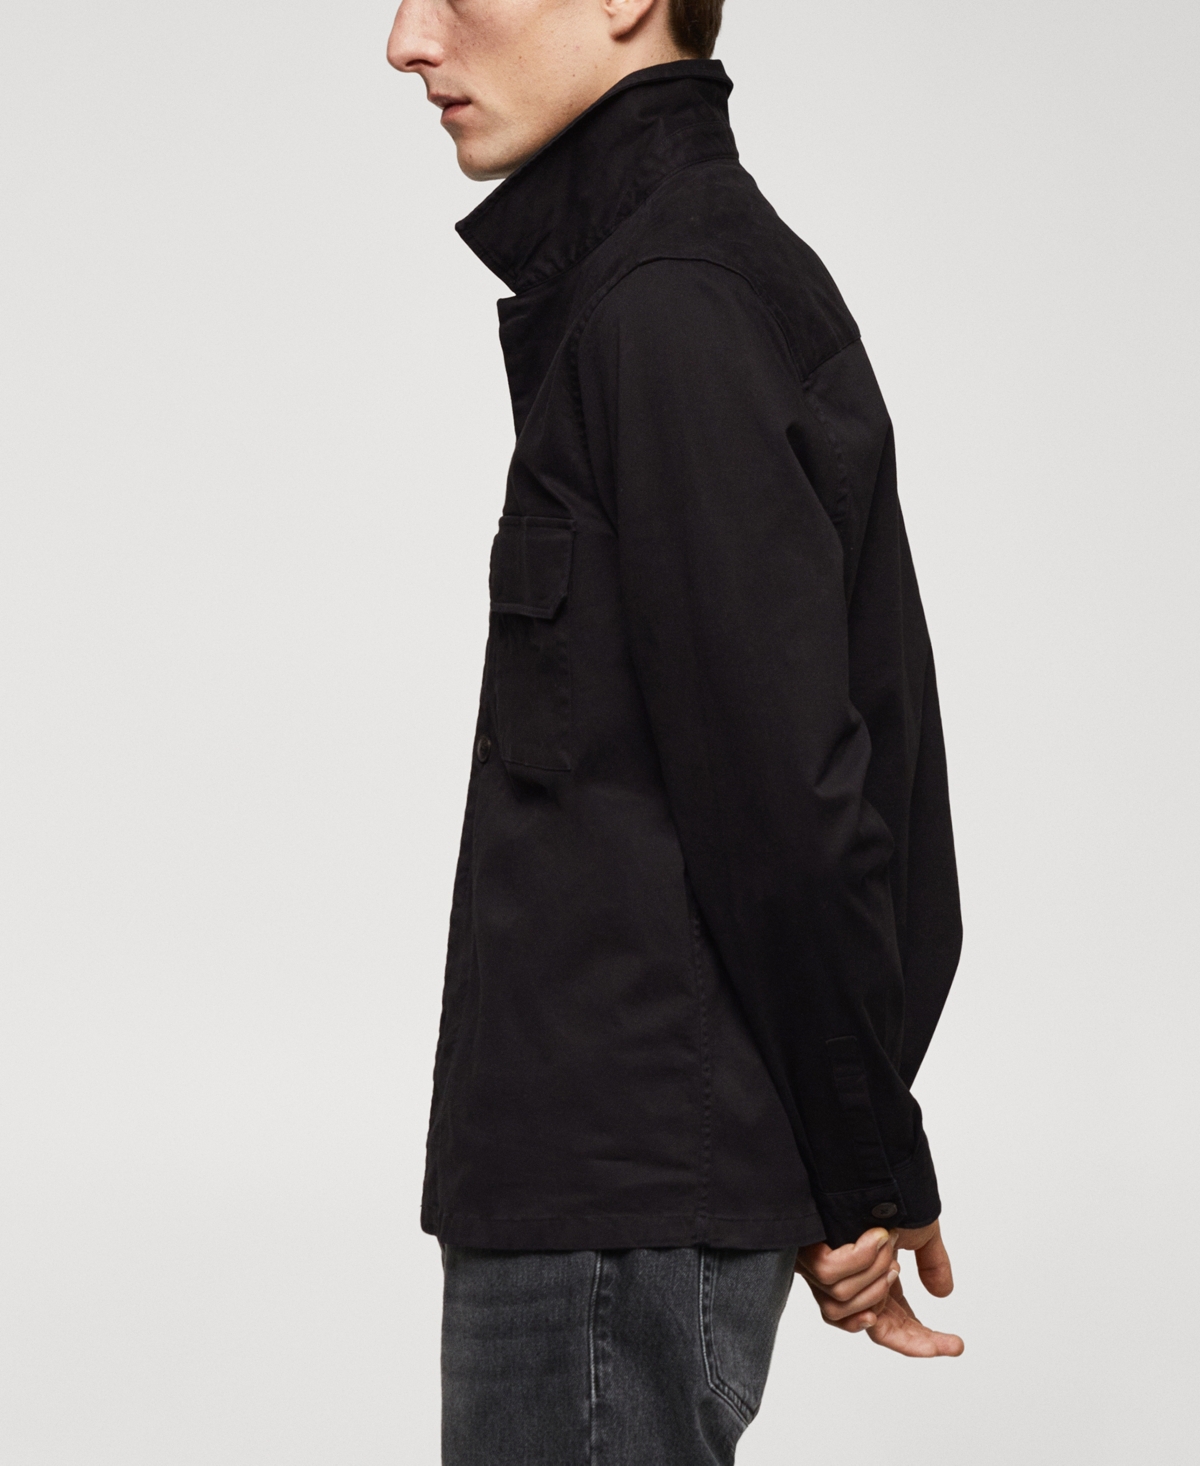 Shop Mango Men's Stretch Cotton Pockets Detail Overshirt In Black